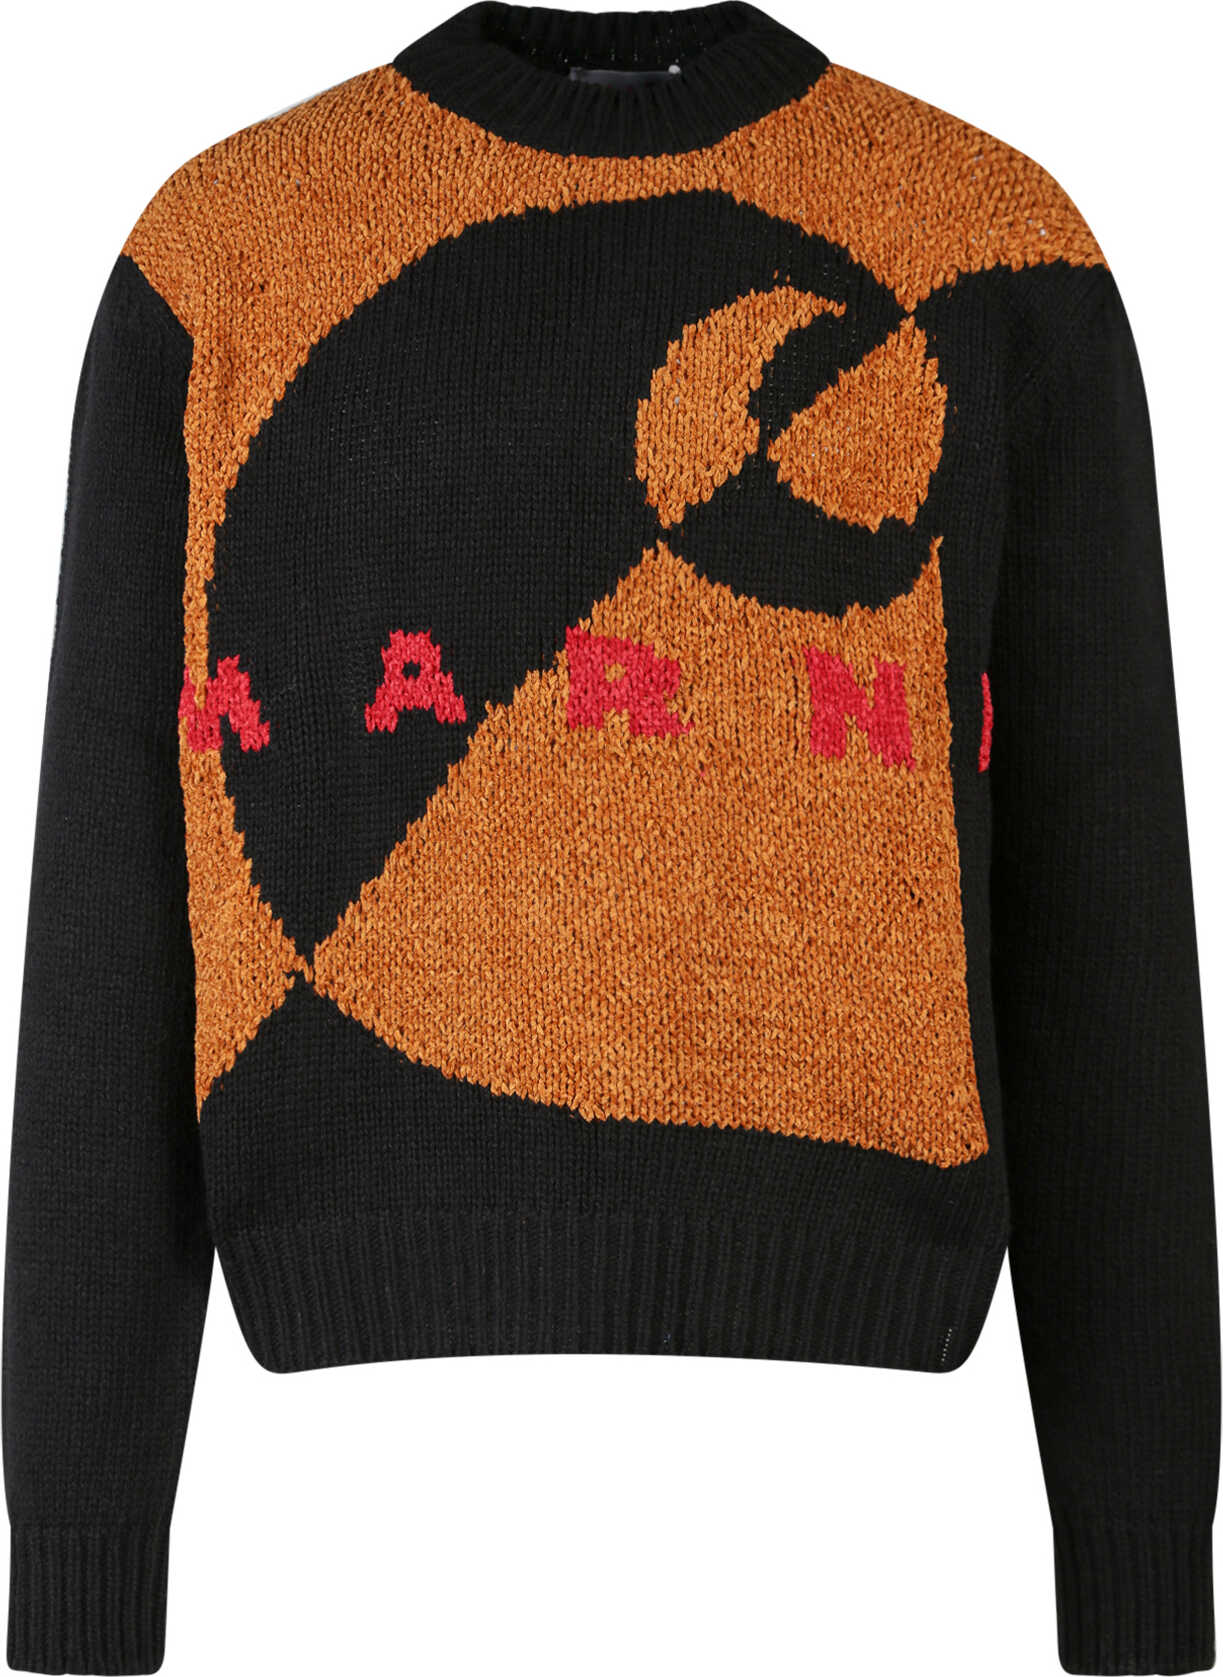 MARNI X CARHARTT WIP Sweater Black